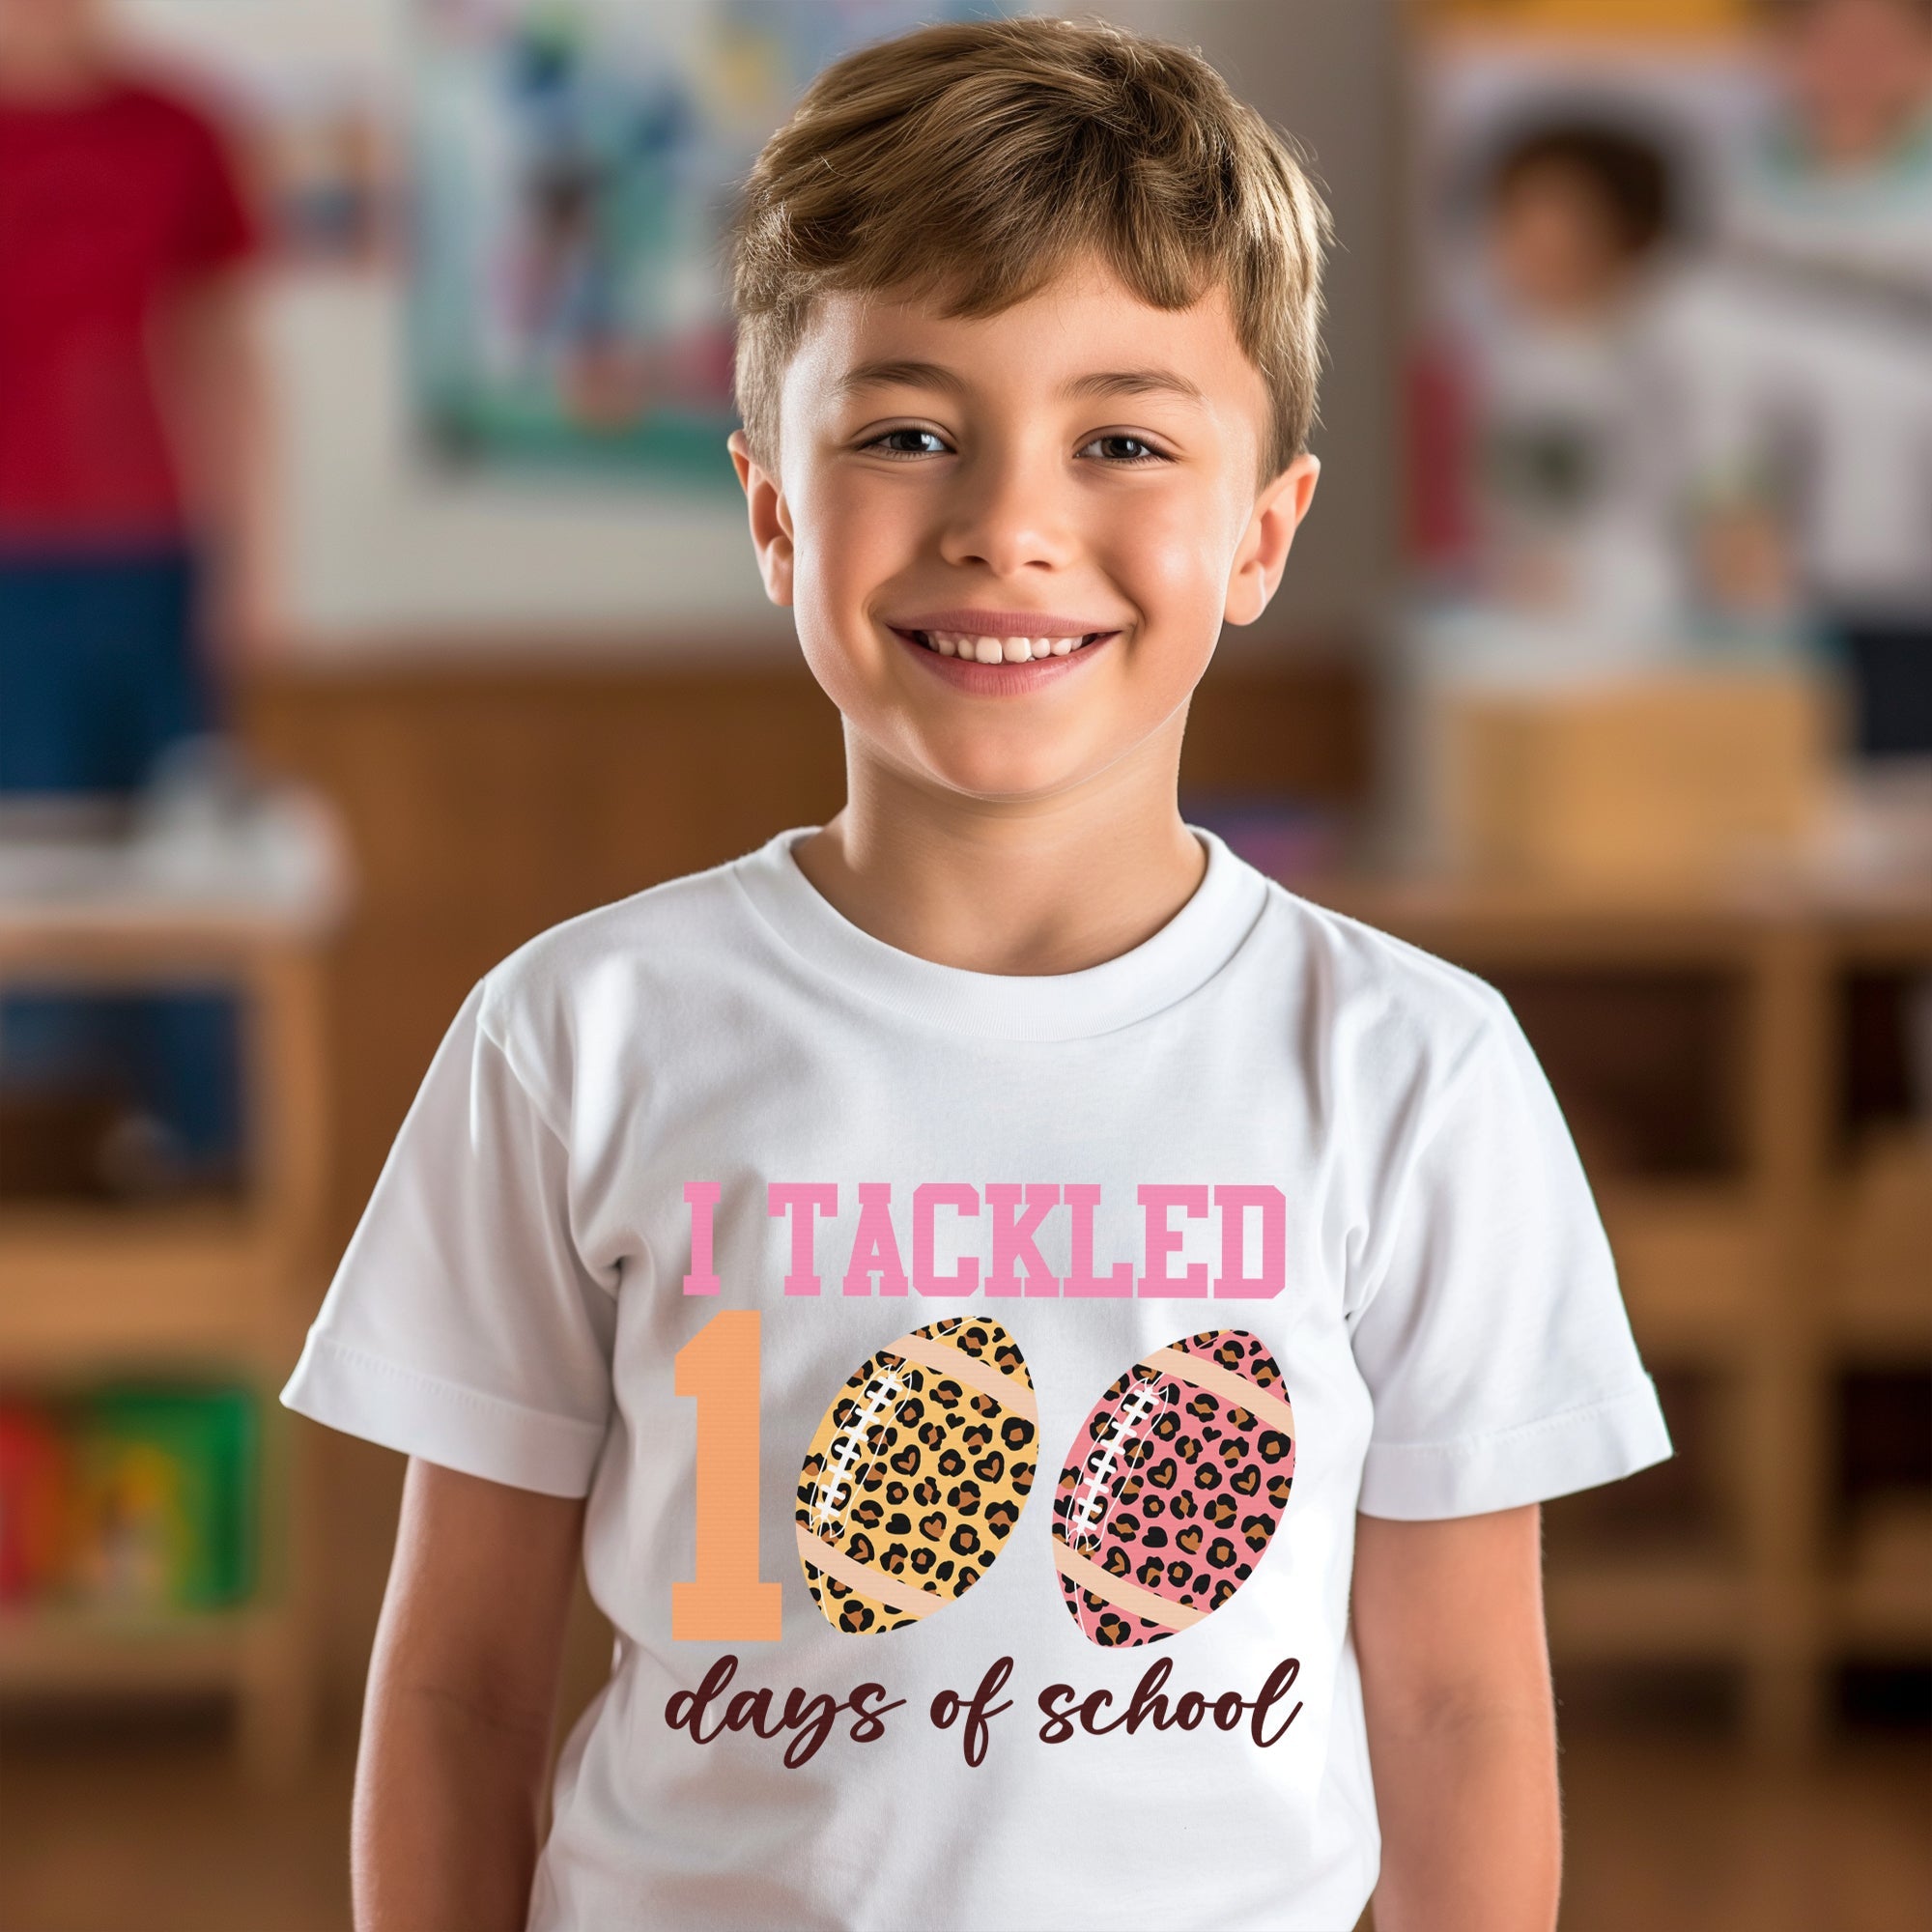 100 Days of School Kids T-Shirt 1163